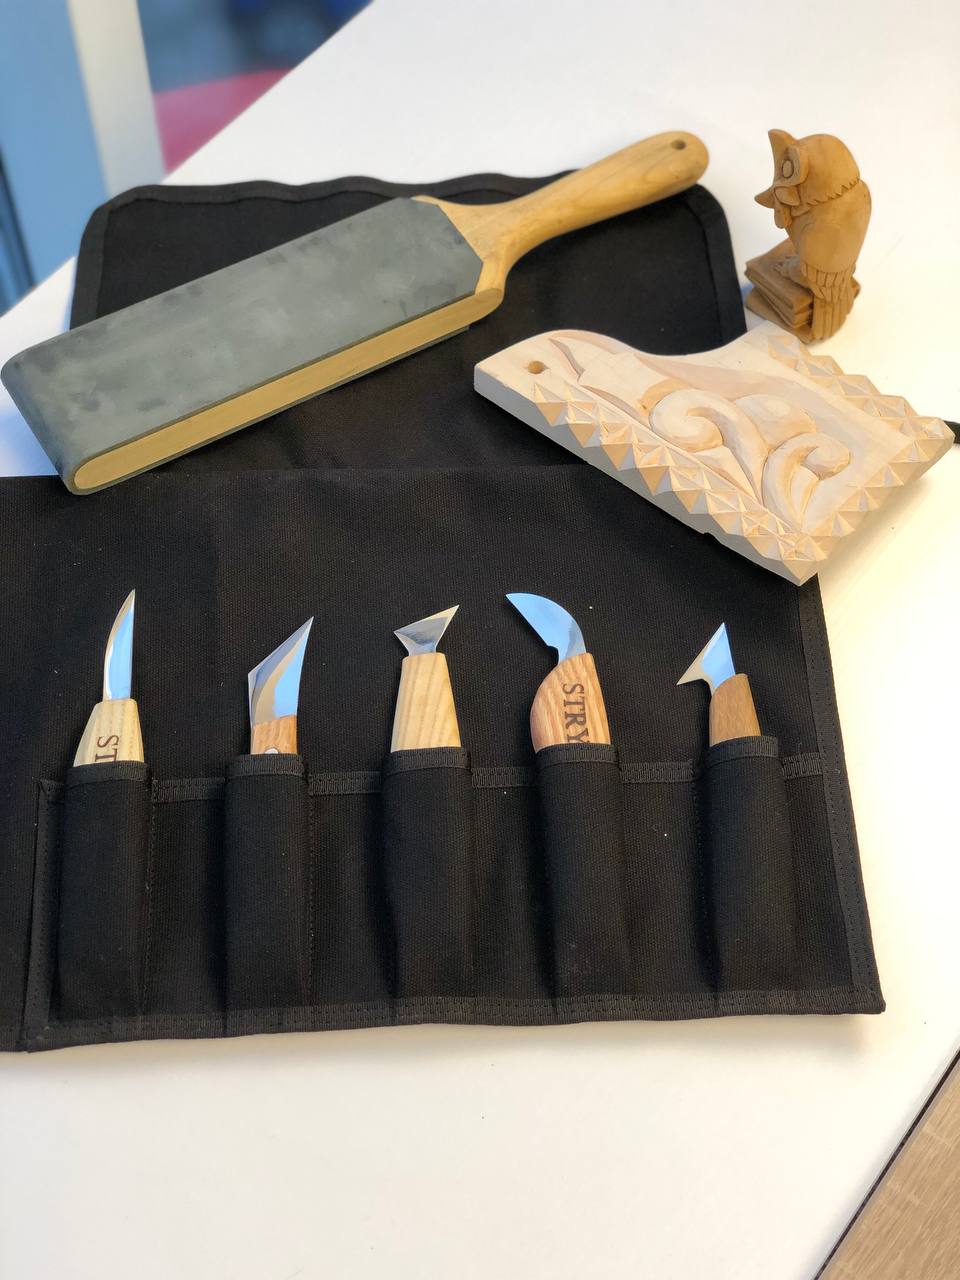 Wood carving knives set, 5pcs in tarpaulin case STRYI